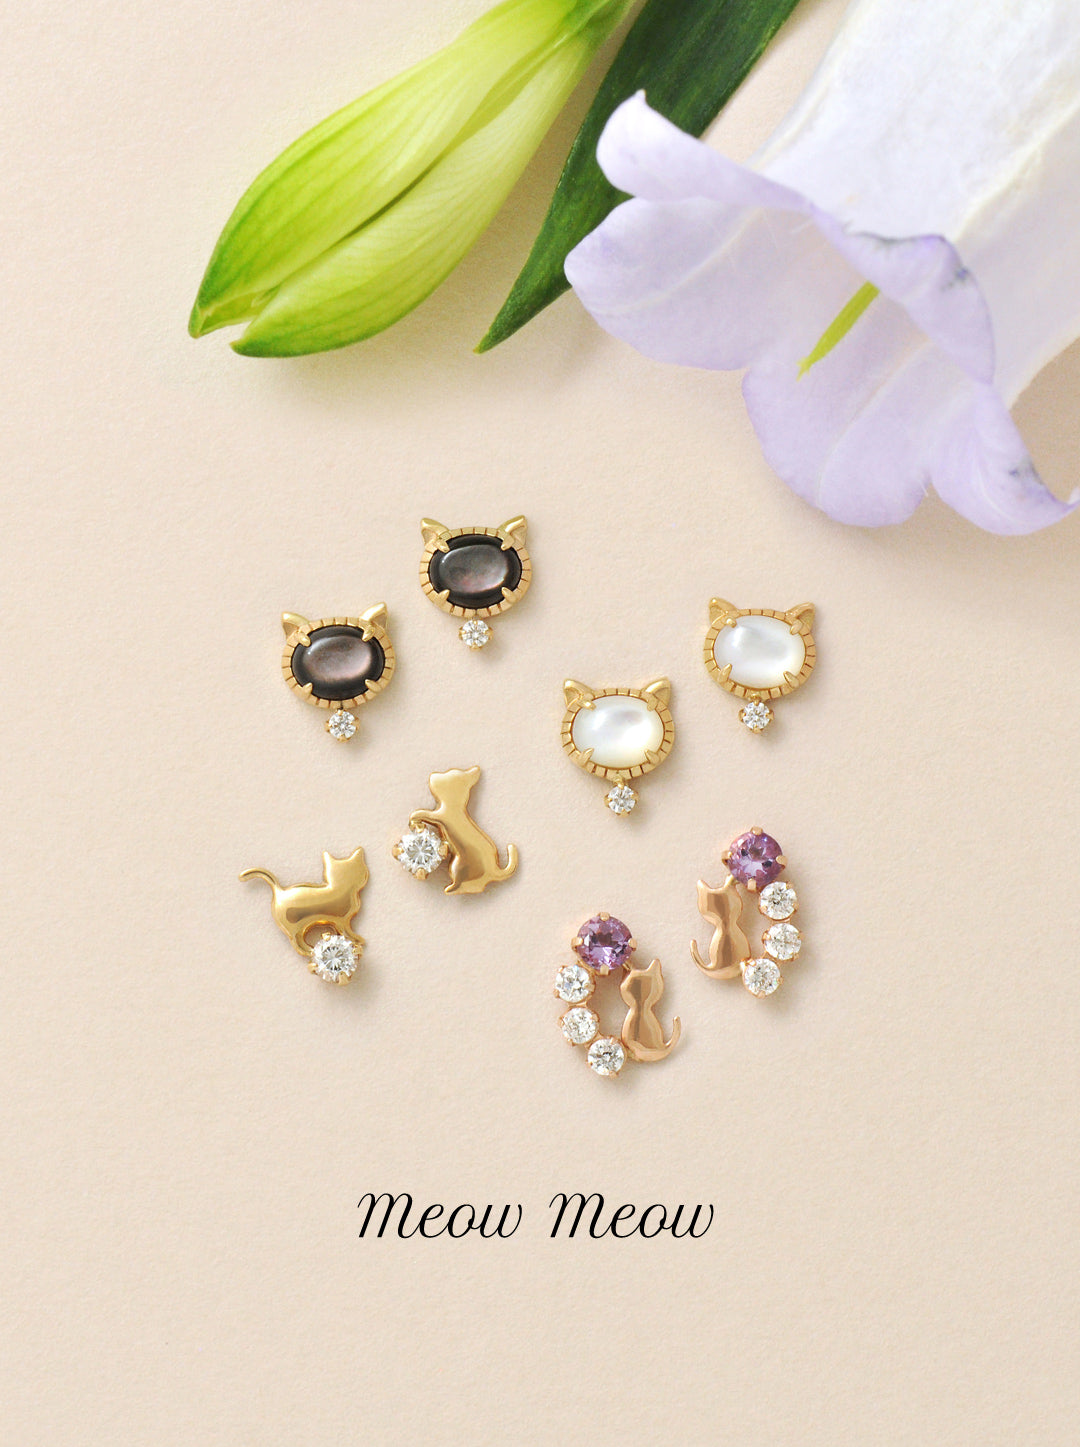 Cat Motif Jewelry